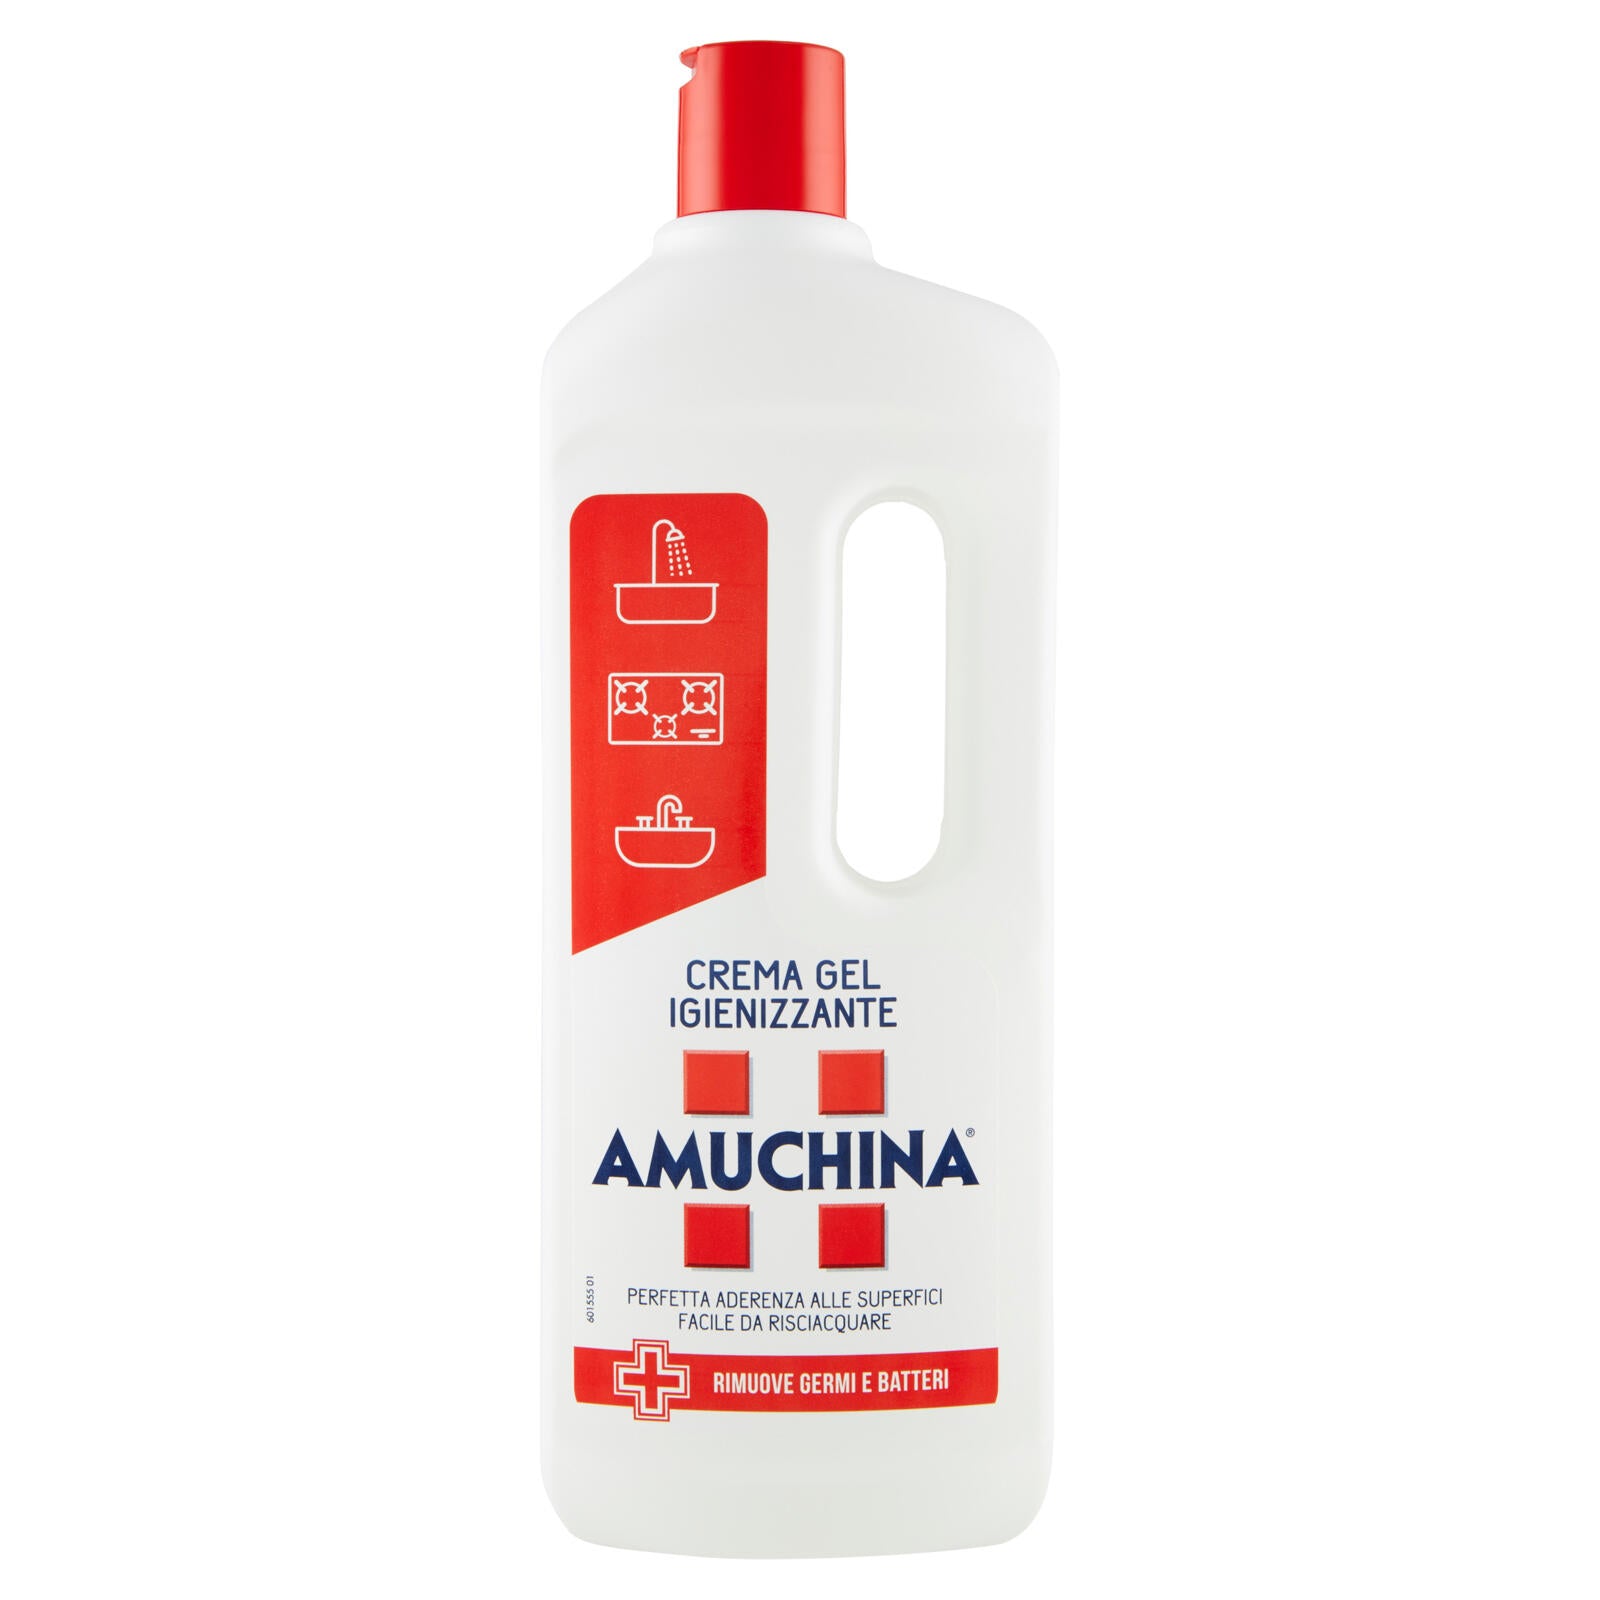 Amuchina Crema Gel Igienizzante 750 ml ->